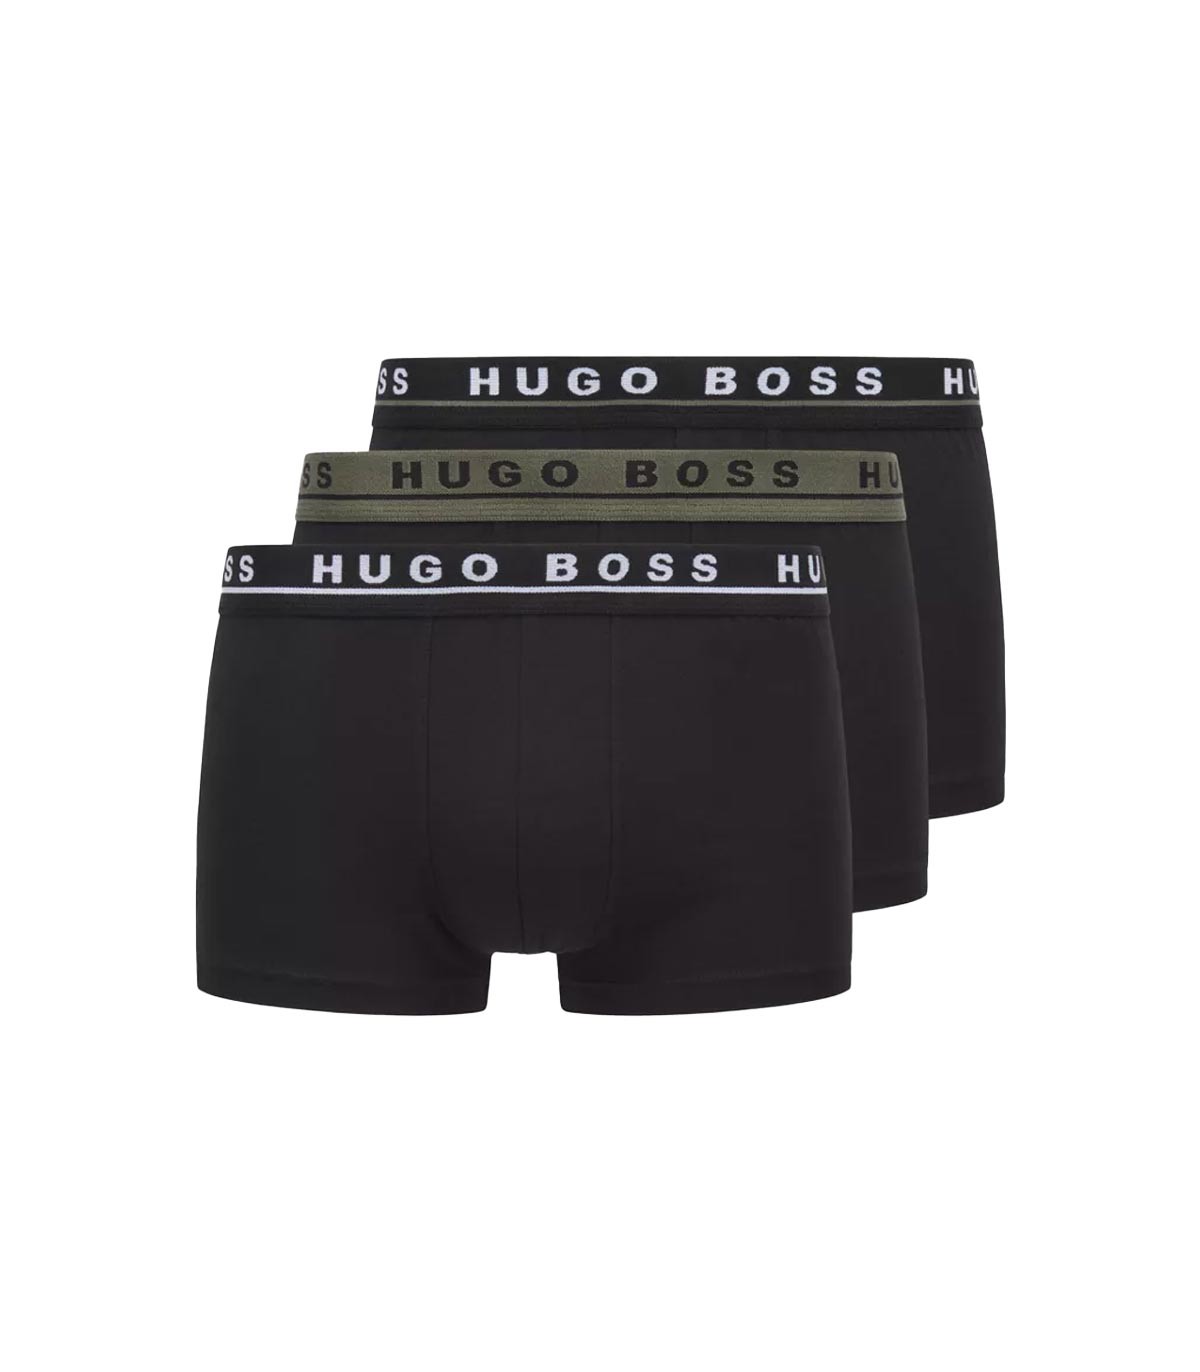 Hugo Boss - Paquete Tres Calzoncillos - Multicolor